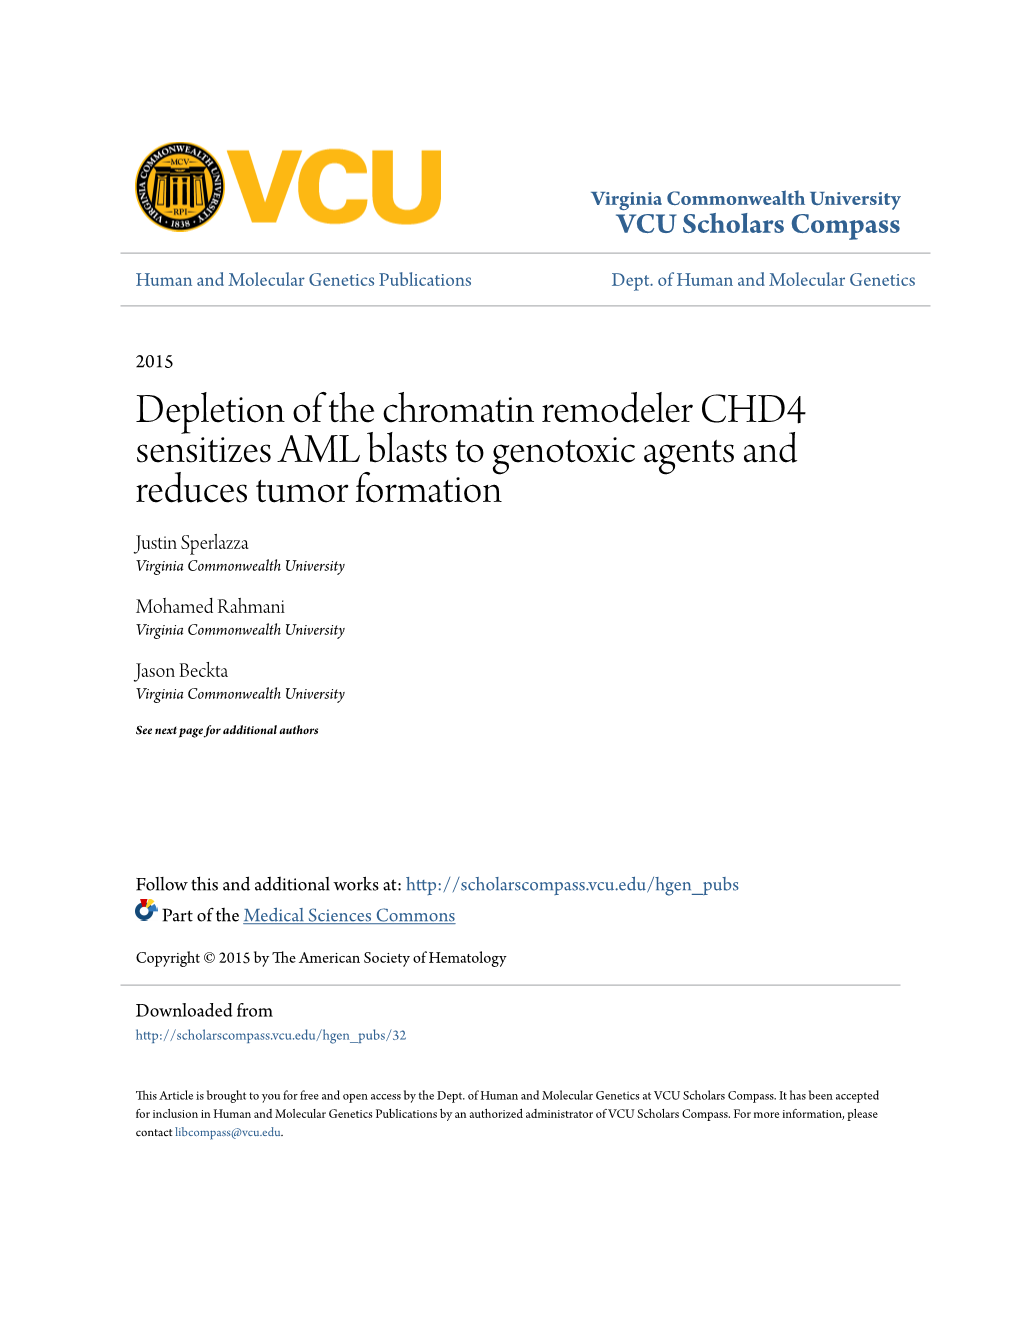 Depletion of the Chromatin Remodeler CHD4 Sensitizes AML Blasts to Genotoxic Agents and Reduces Tumor Formation Justin Sperlazza Virginia Commonwealth University